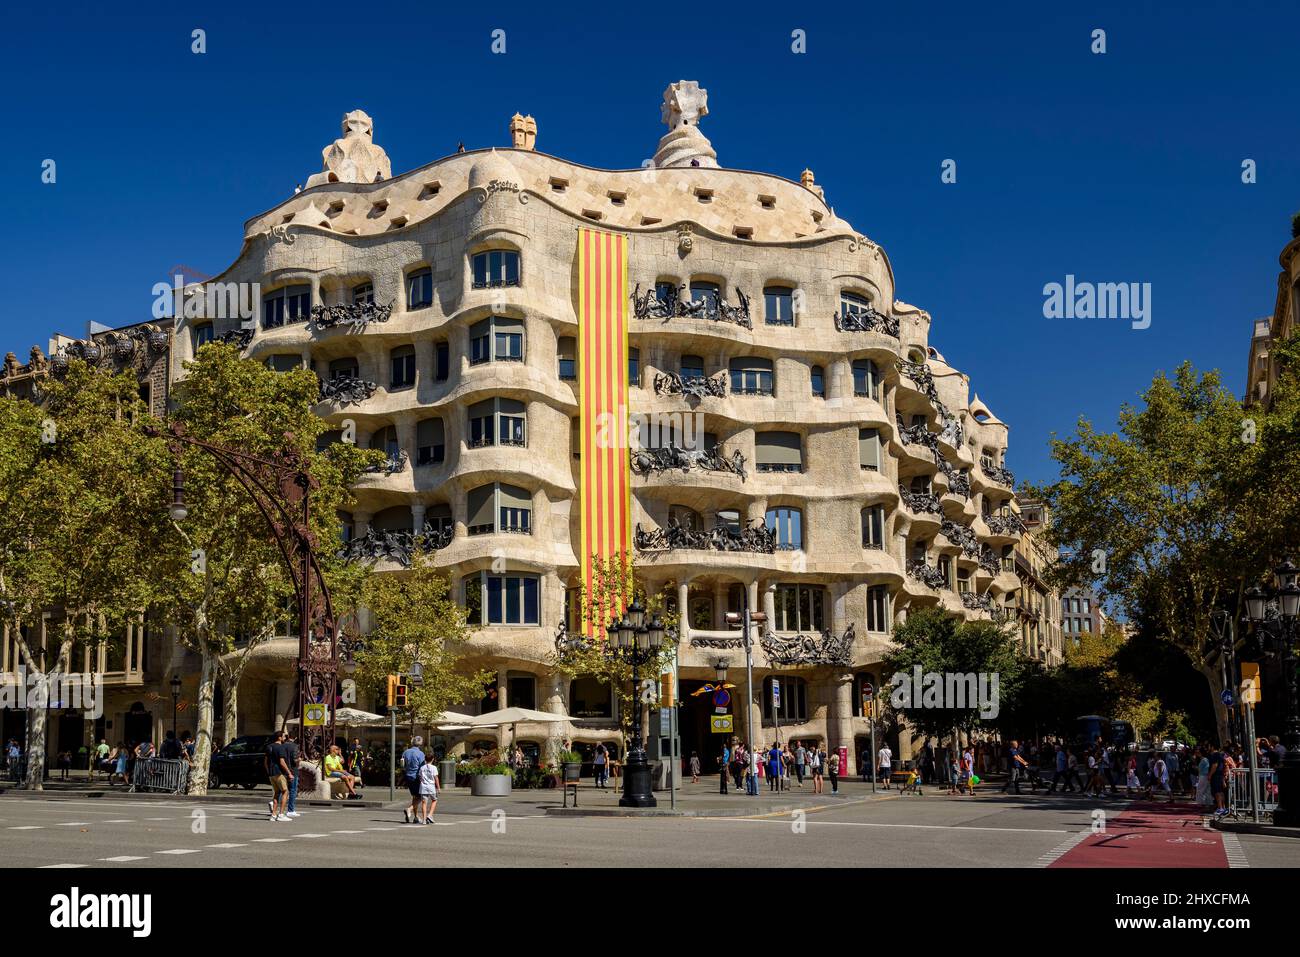 Gaudí's La Pedrera (Casa Milà) with the Catalan flag in commemoration of September 11, Catalonian Day (Barcelona, Catalonia, Spain) Stock Photo